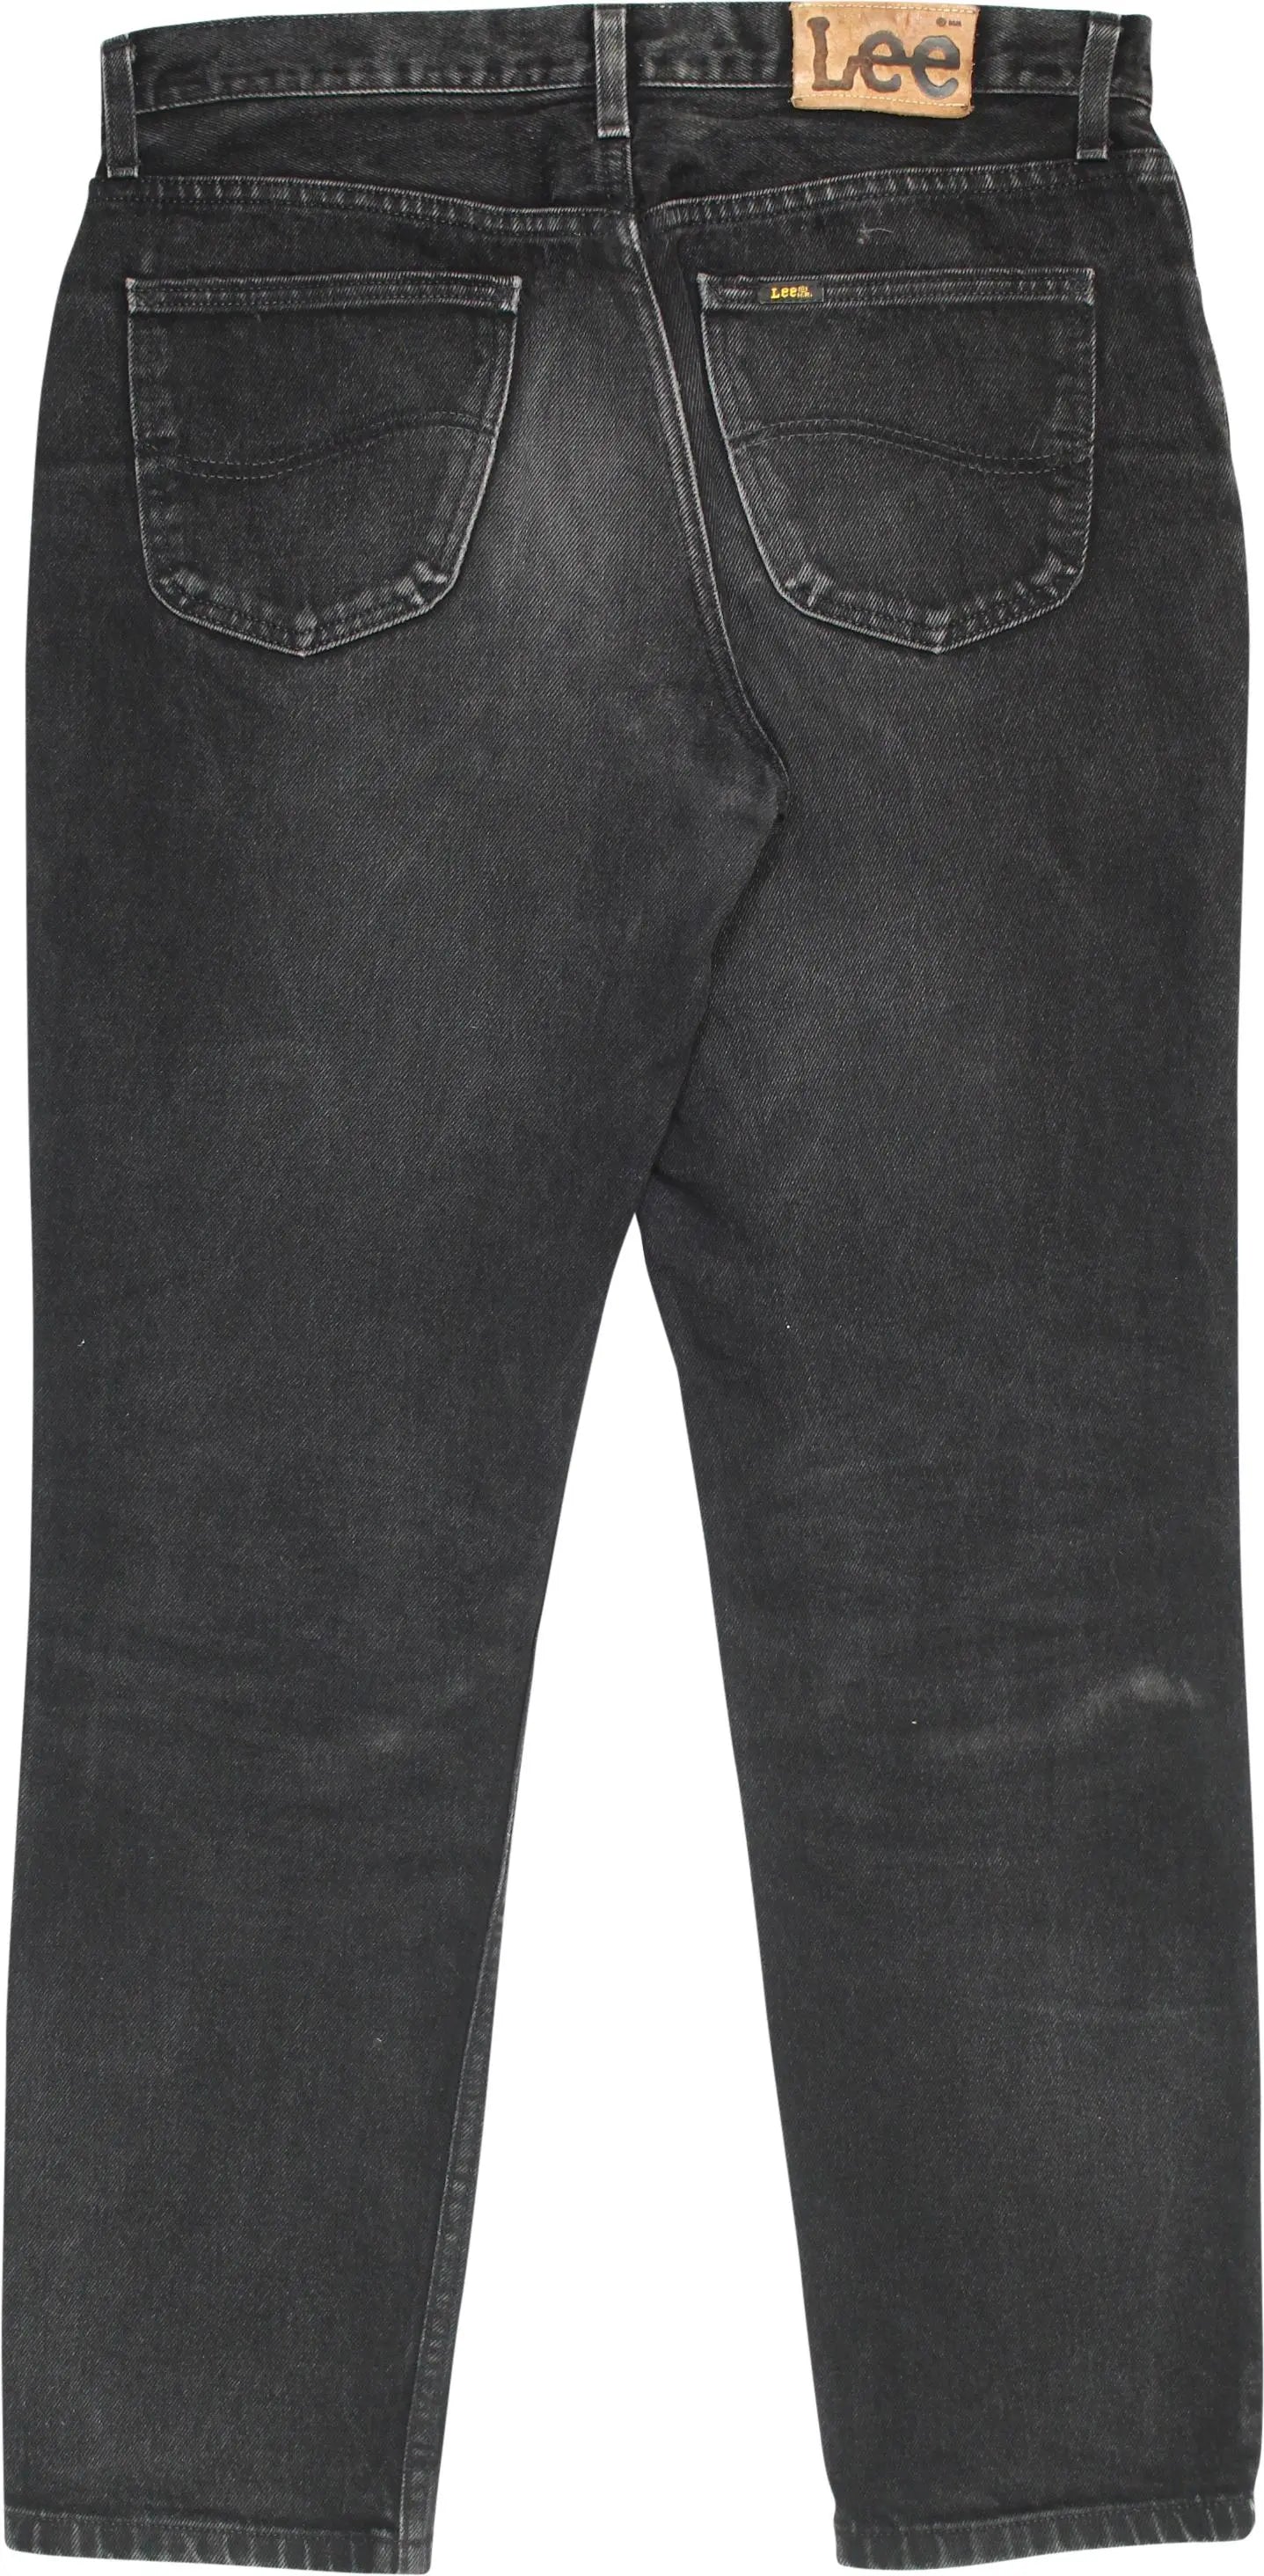 Lee - Lee Phoenix Slim Fit Jeans- ThriftTale.com - Vintage and second handclothing